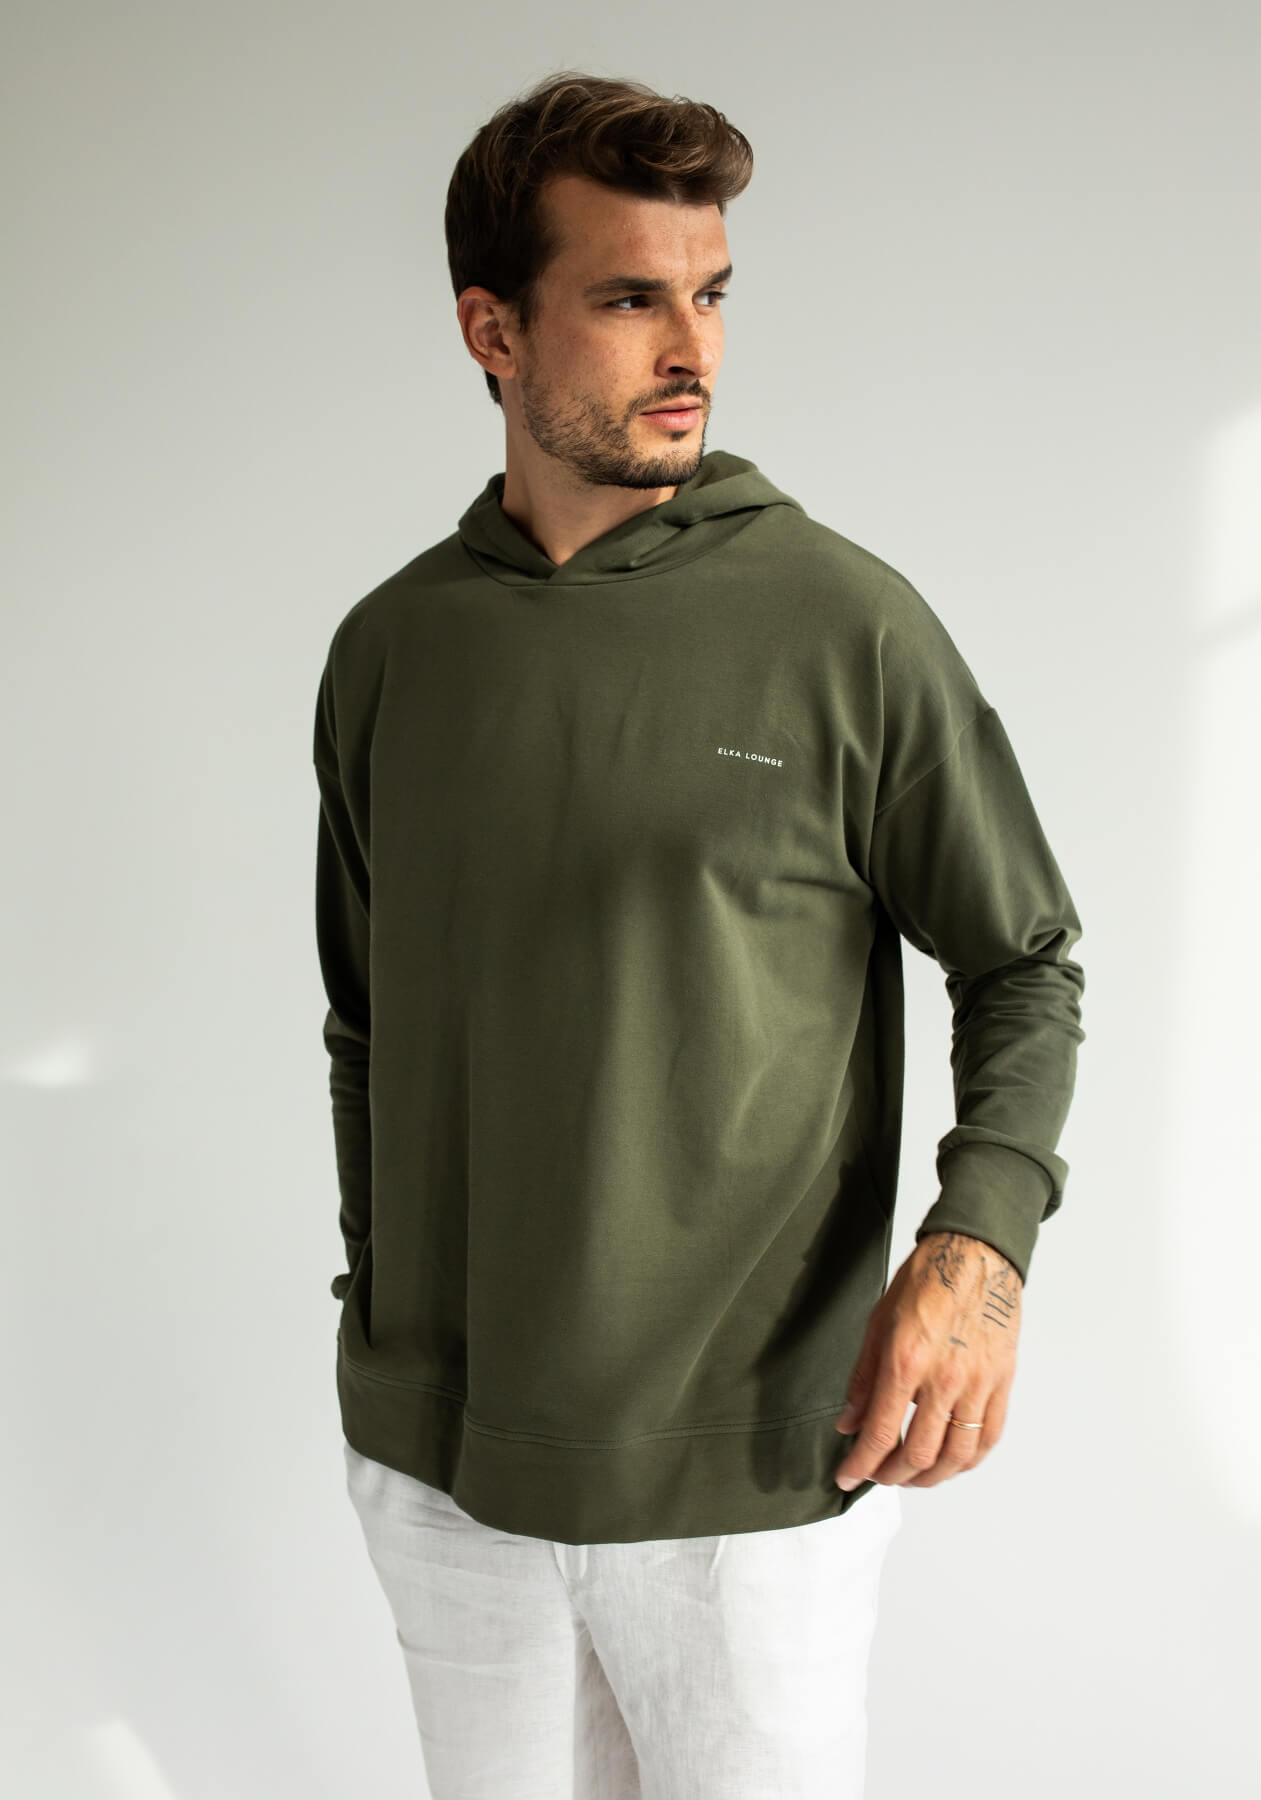 Men sweatshirt organic cotton Moss green - Oversized